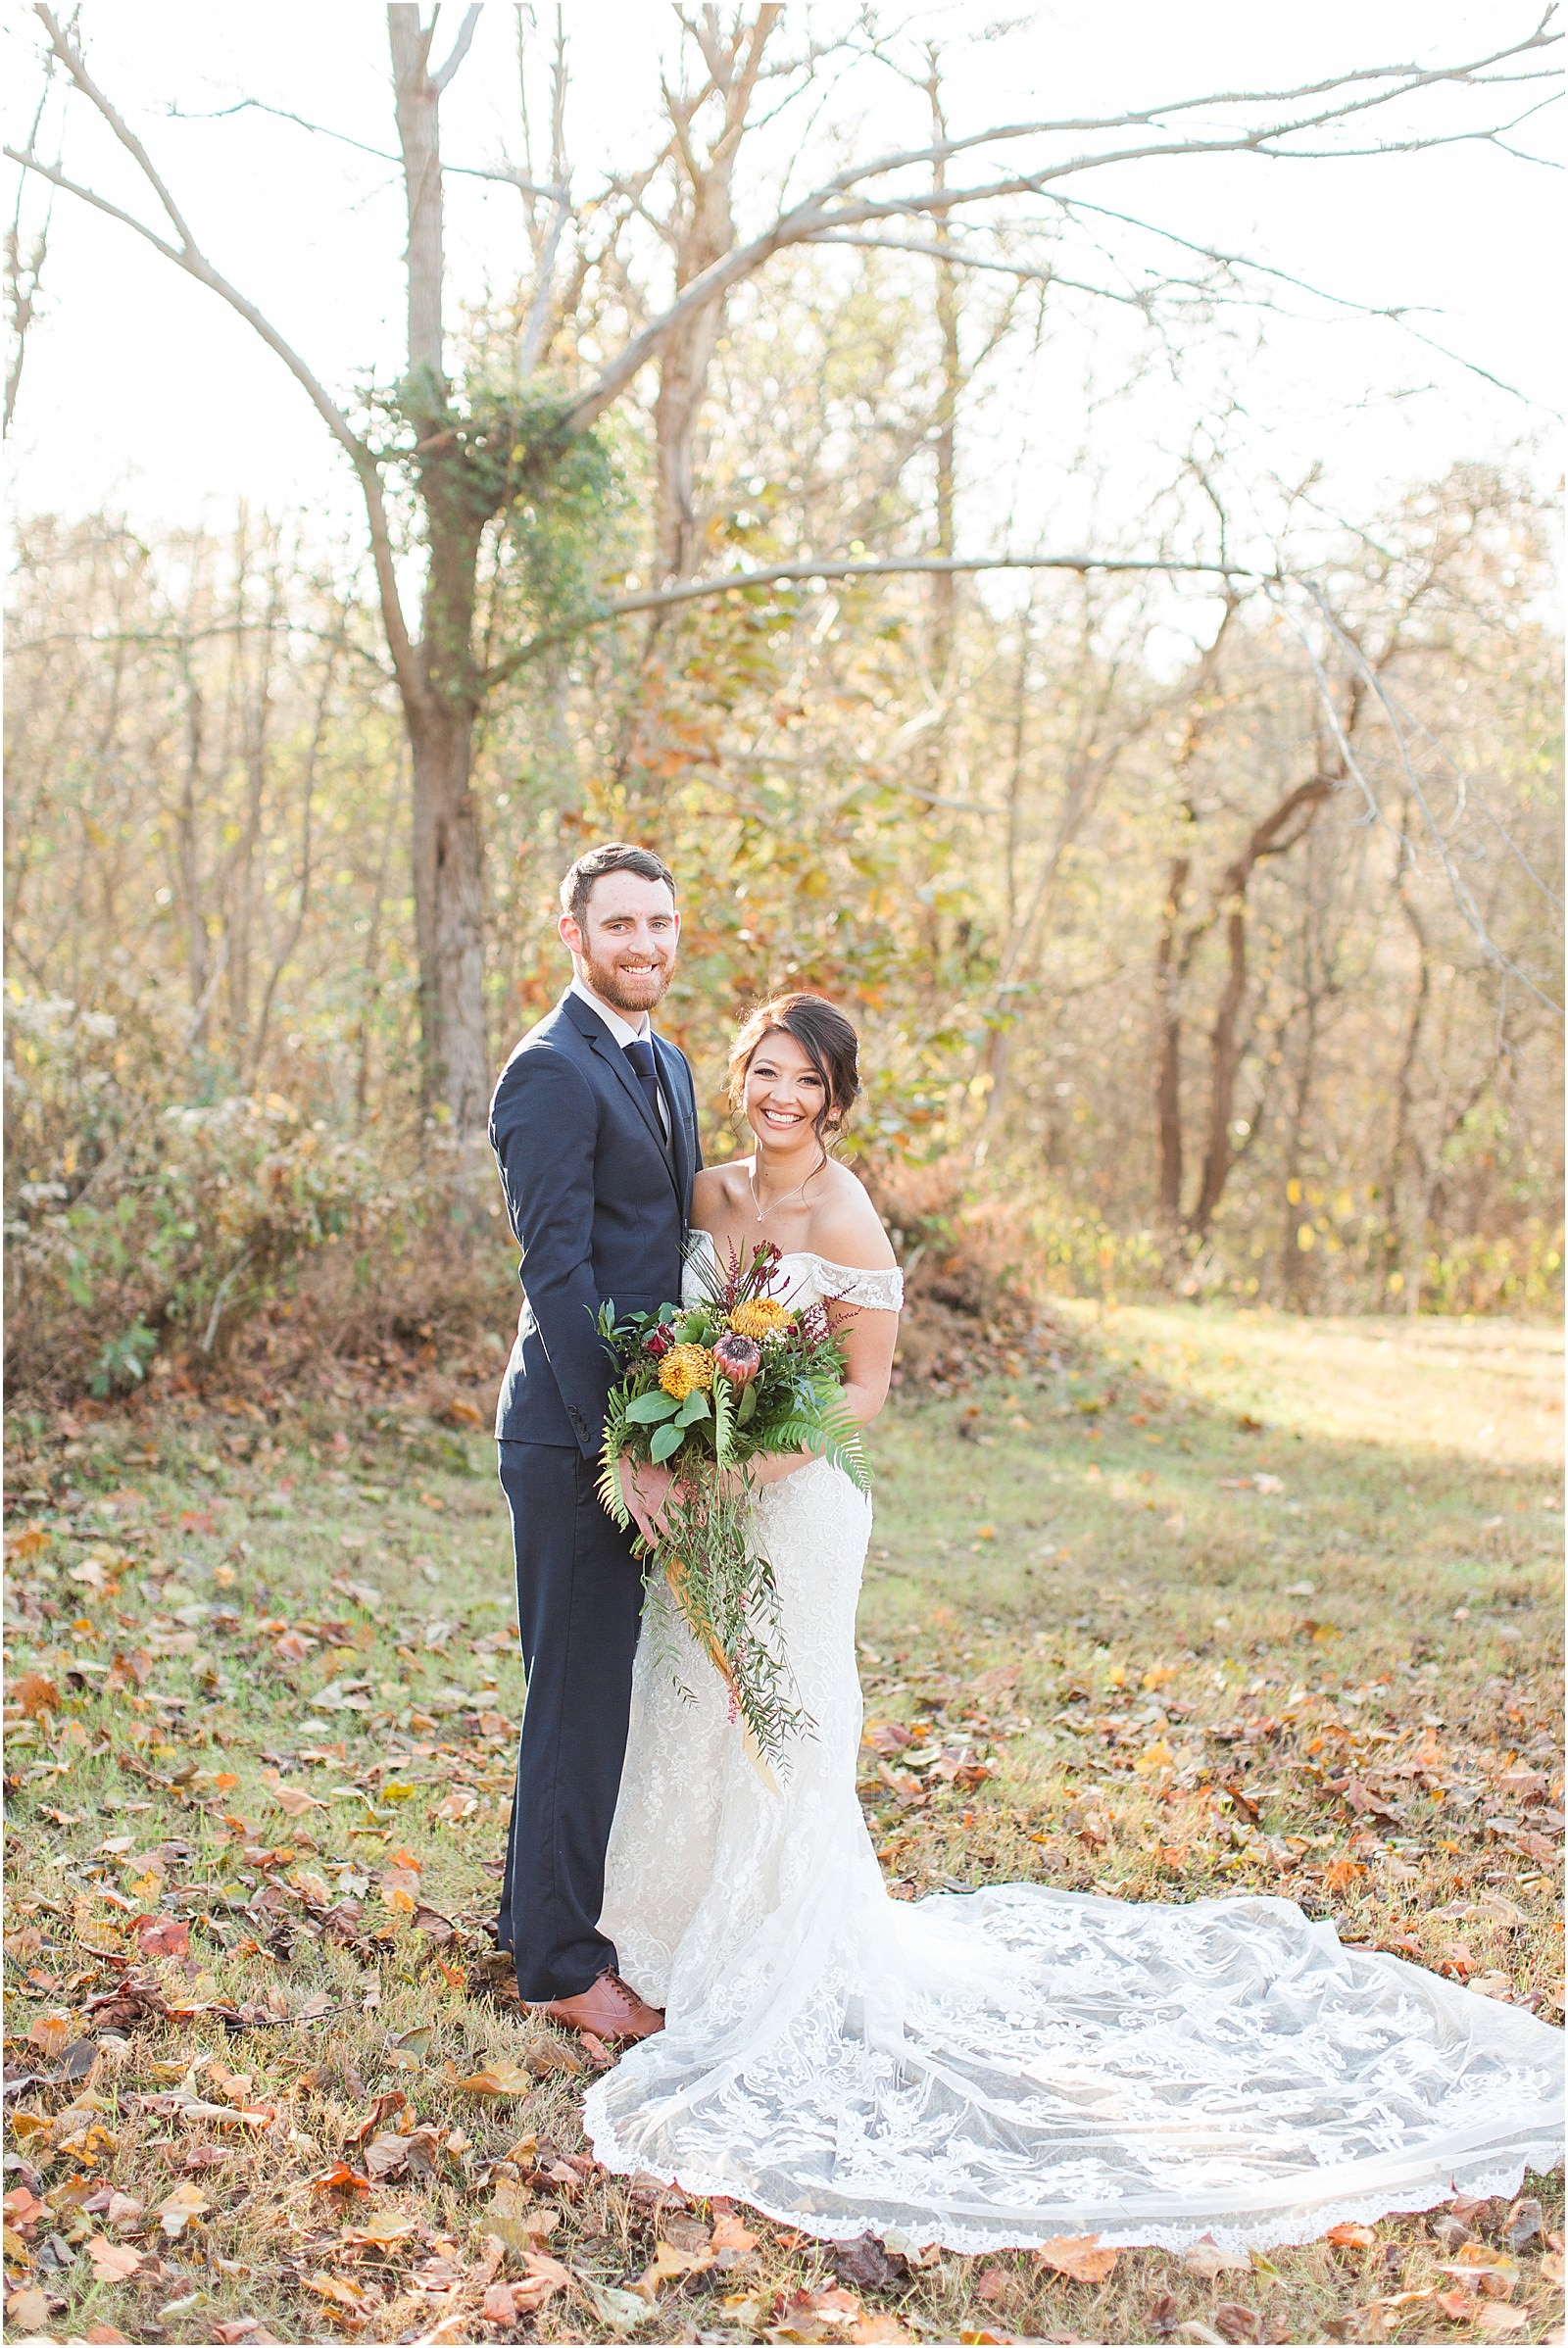 Walker and Alyssa's intimate fall wedding in Southern Indiana. | Wedding Photography | The Corner House Wedding | Southern Indiana Wedding | #fallwedding #intimatewedding | 037.jpg